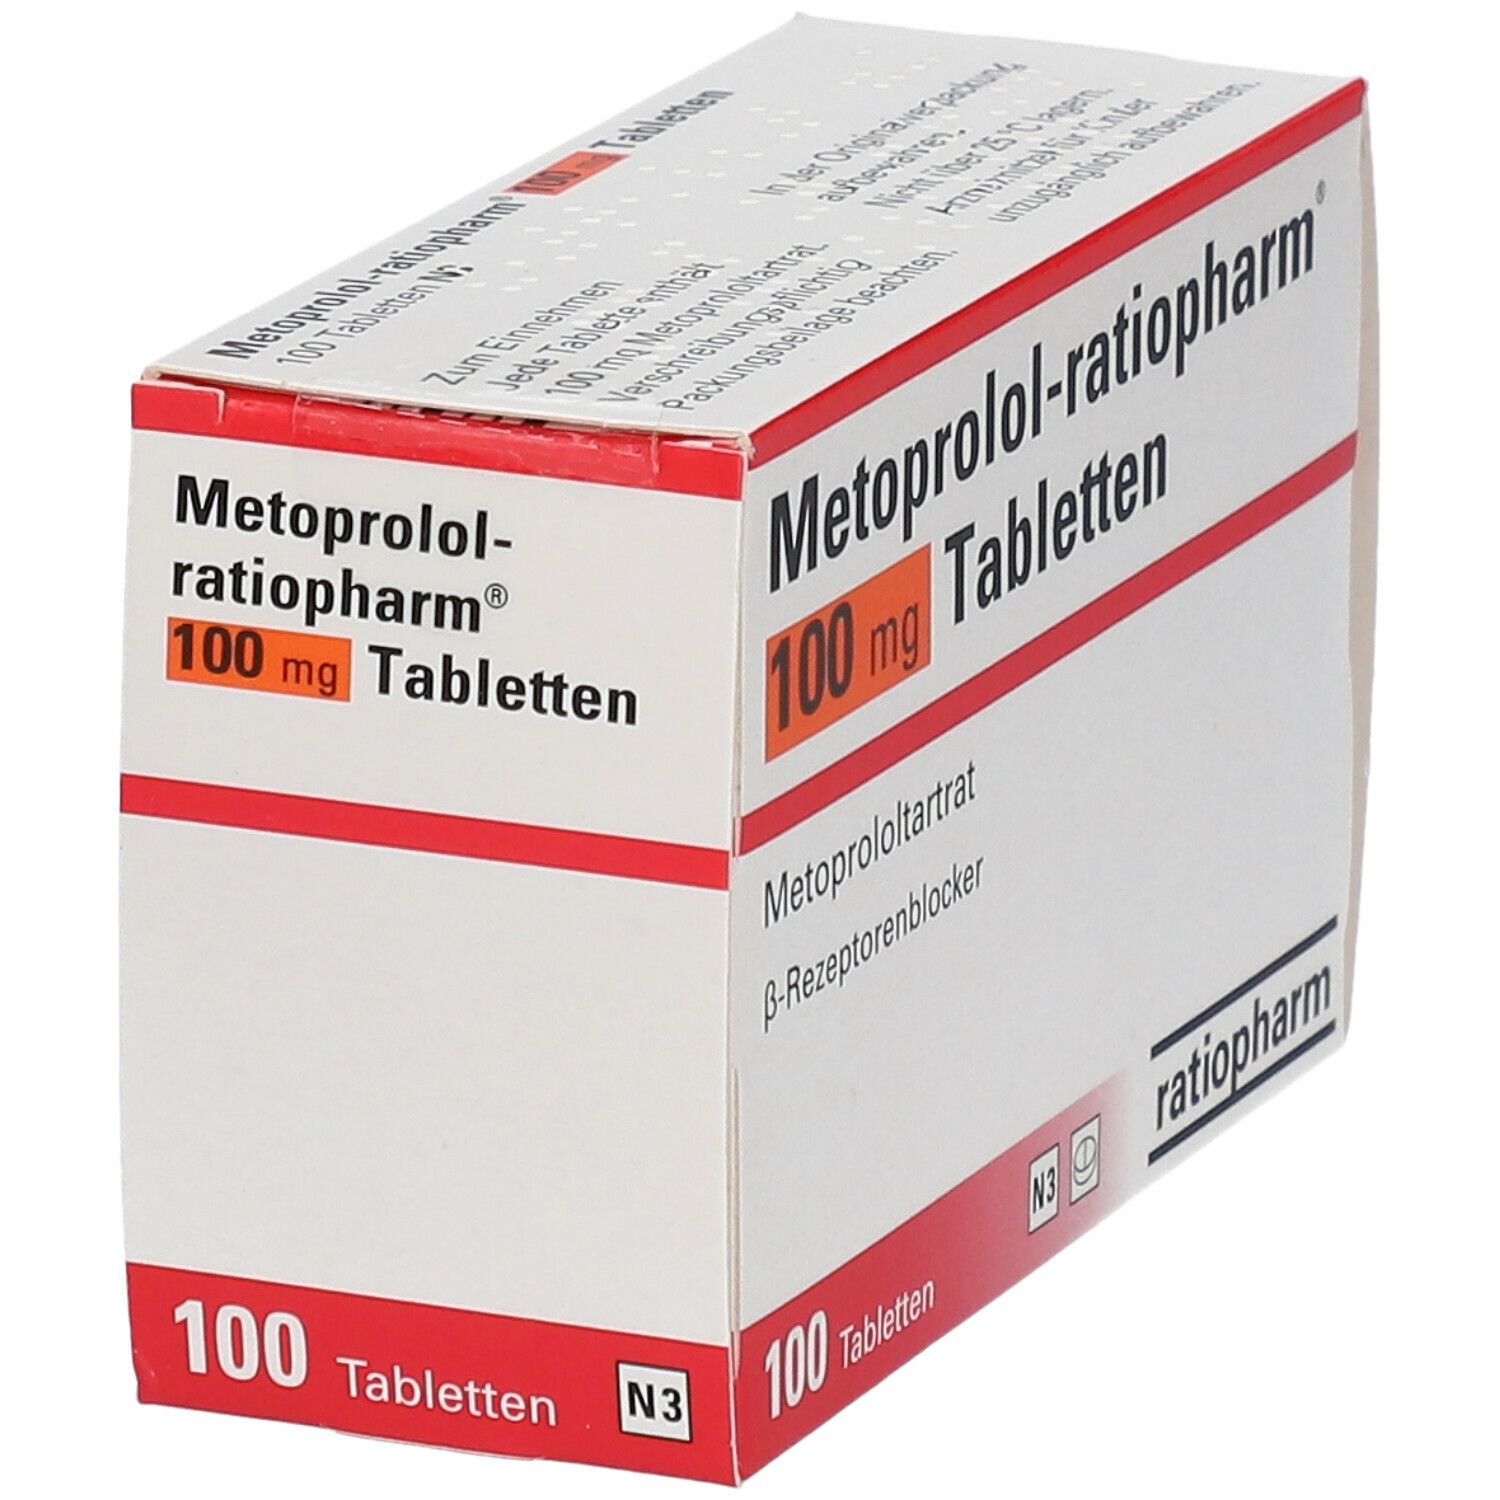 Metoprolol-ratiopharm® 100 mg